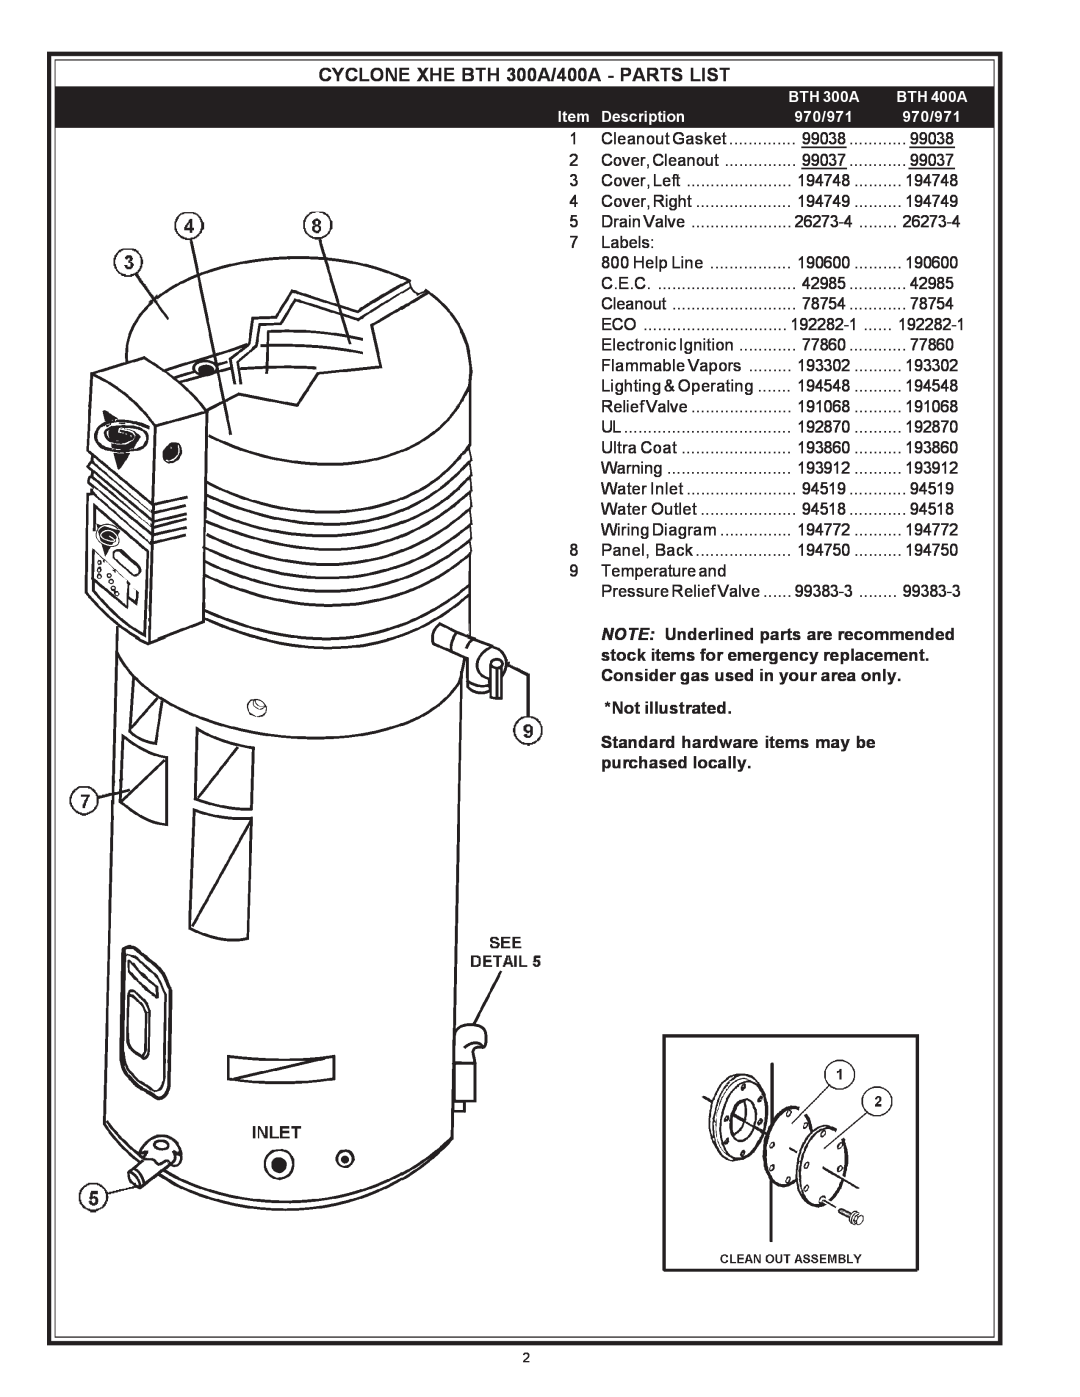 A.O. Smith 970 Series manual CYCLONE XHE BTH 300A/400A - PARTS LIST, BTH 400A, Description, 970/971 